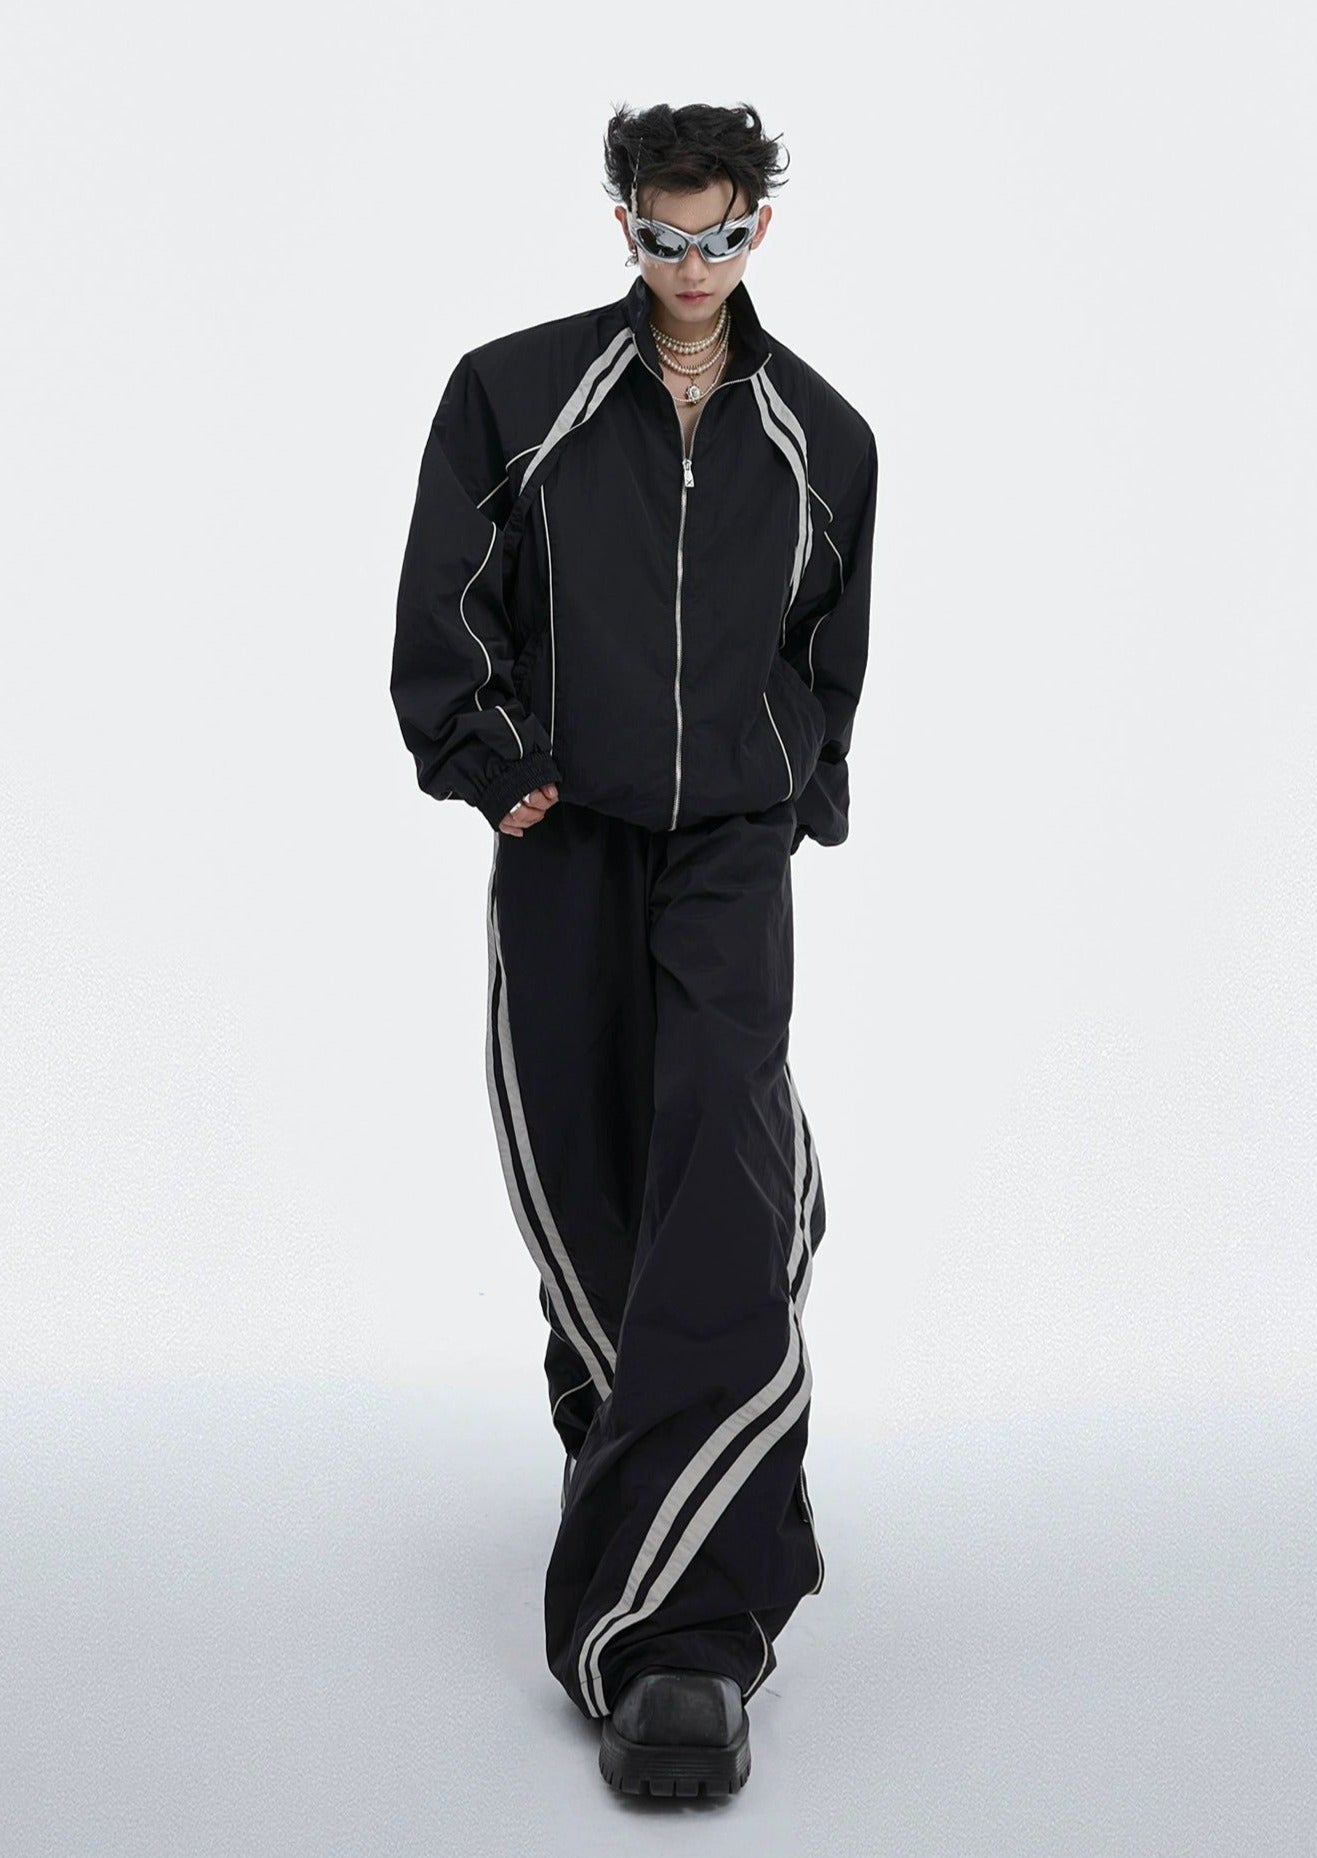 Athleisure Contrast Jacket & Track Pants Set Korean Street Fashion Clothing Set By Argue Culture Shop Online at OH Vault